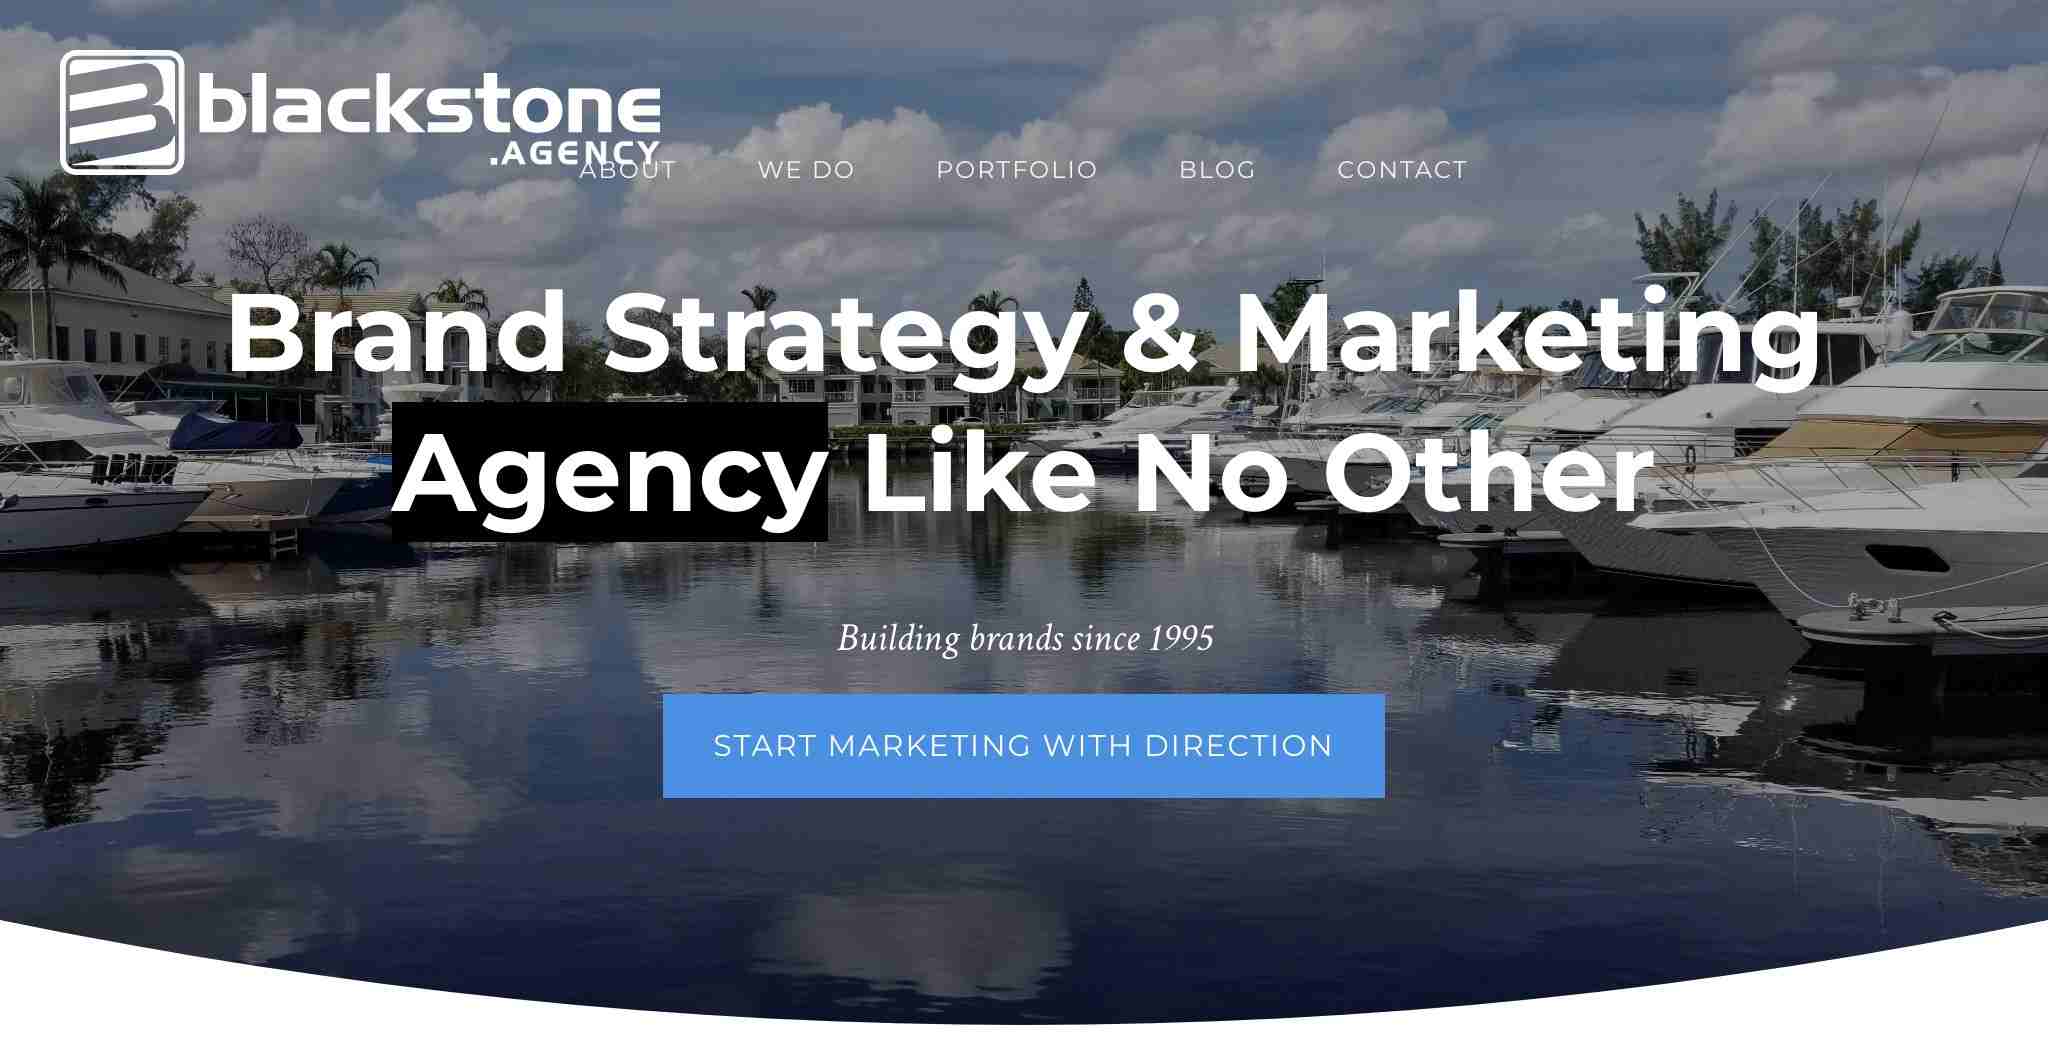 Blackstone Agency